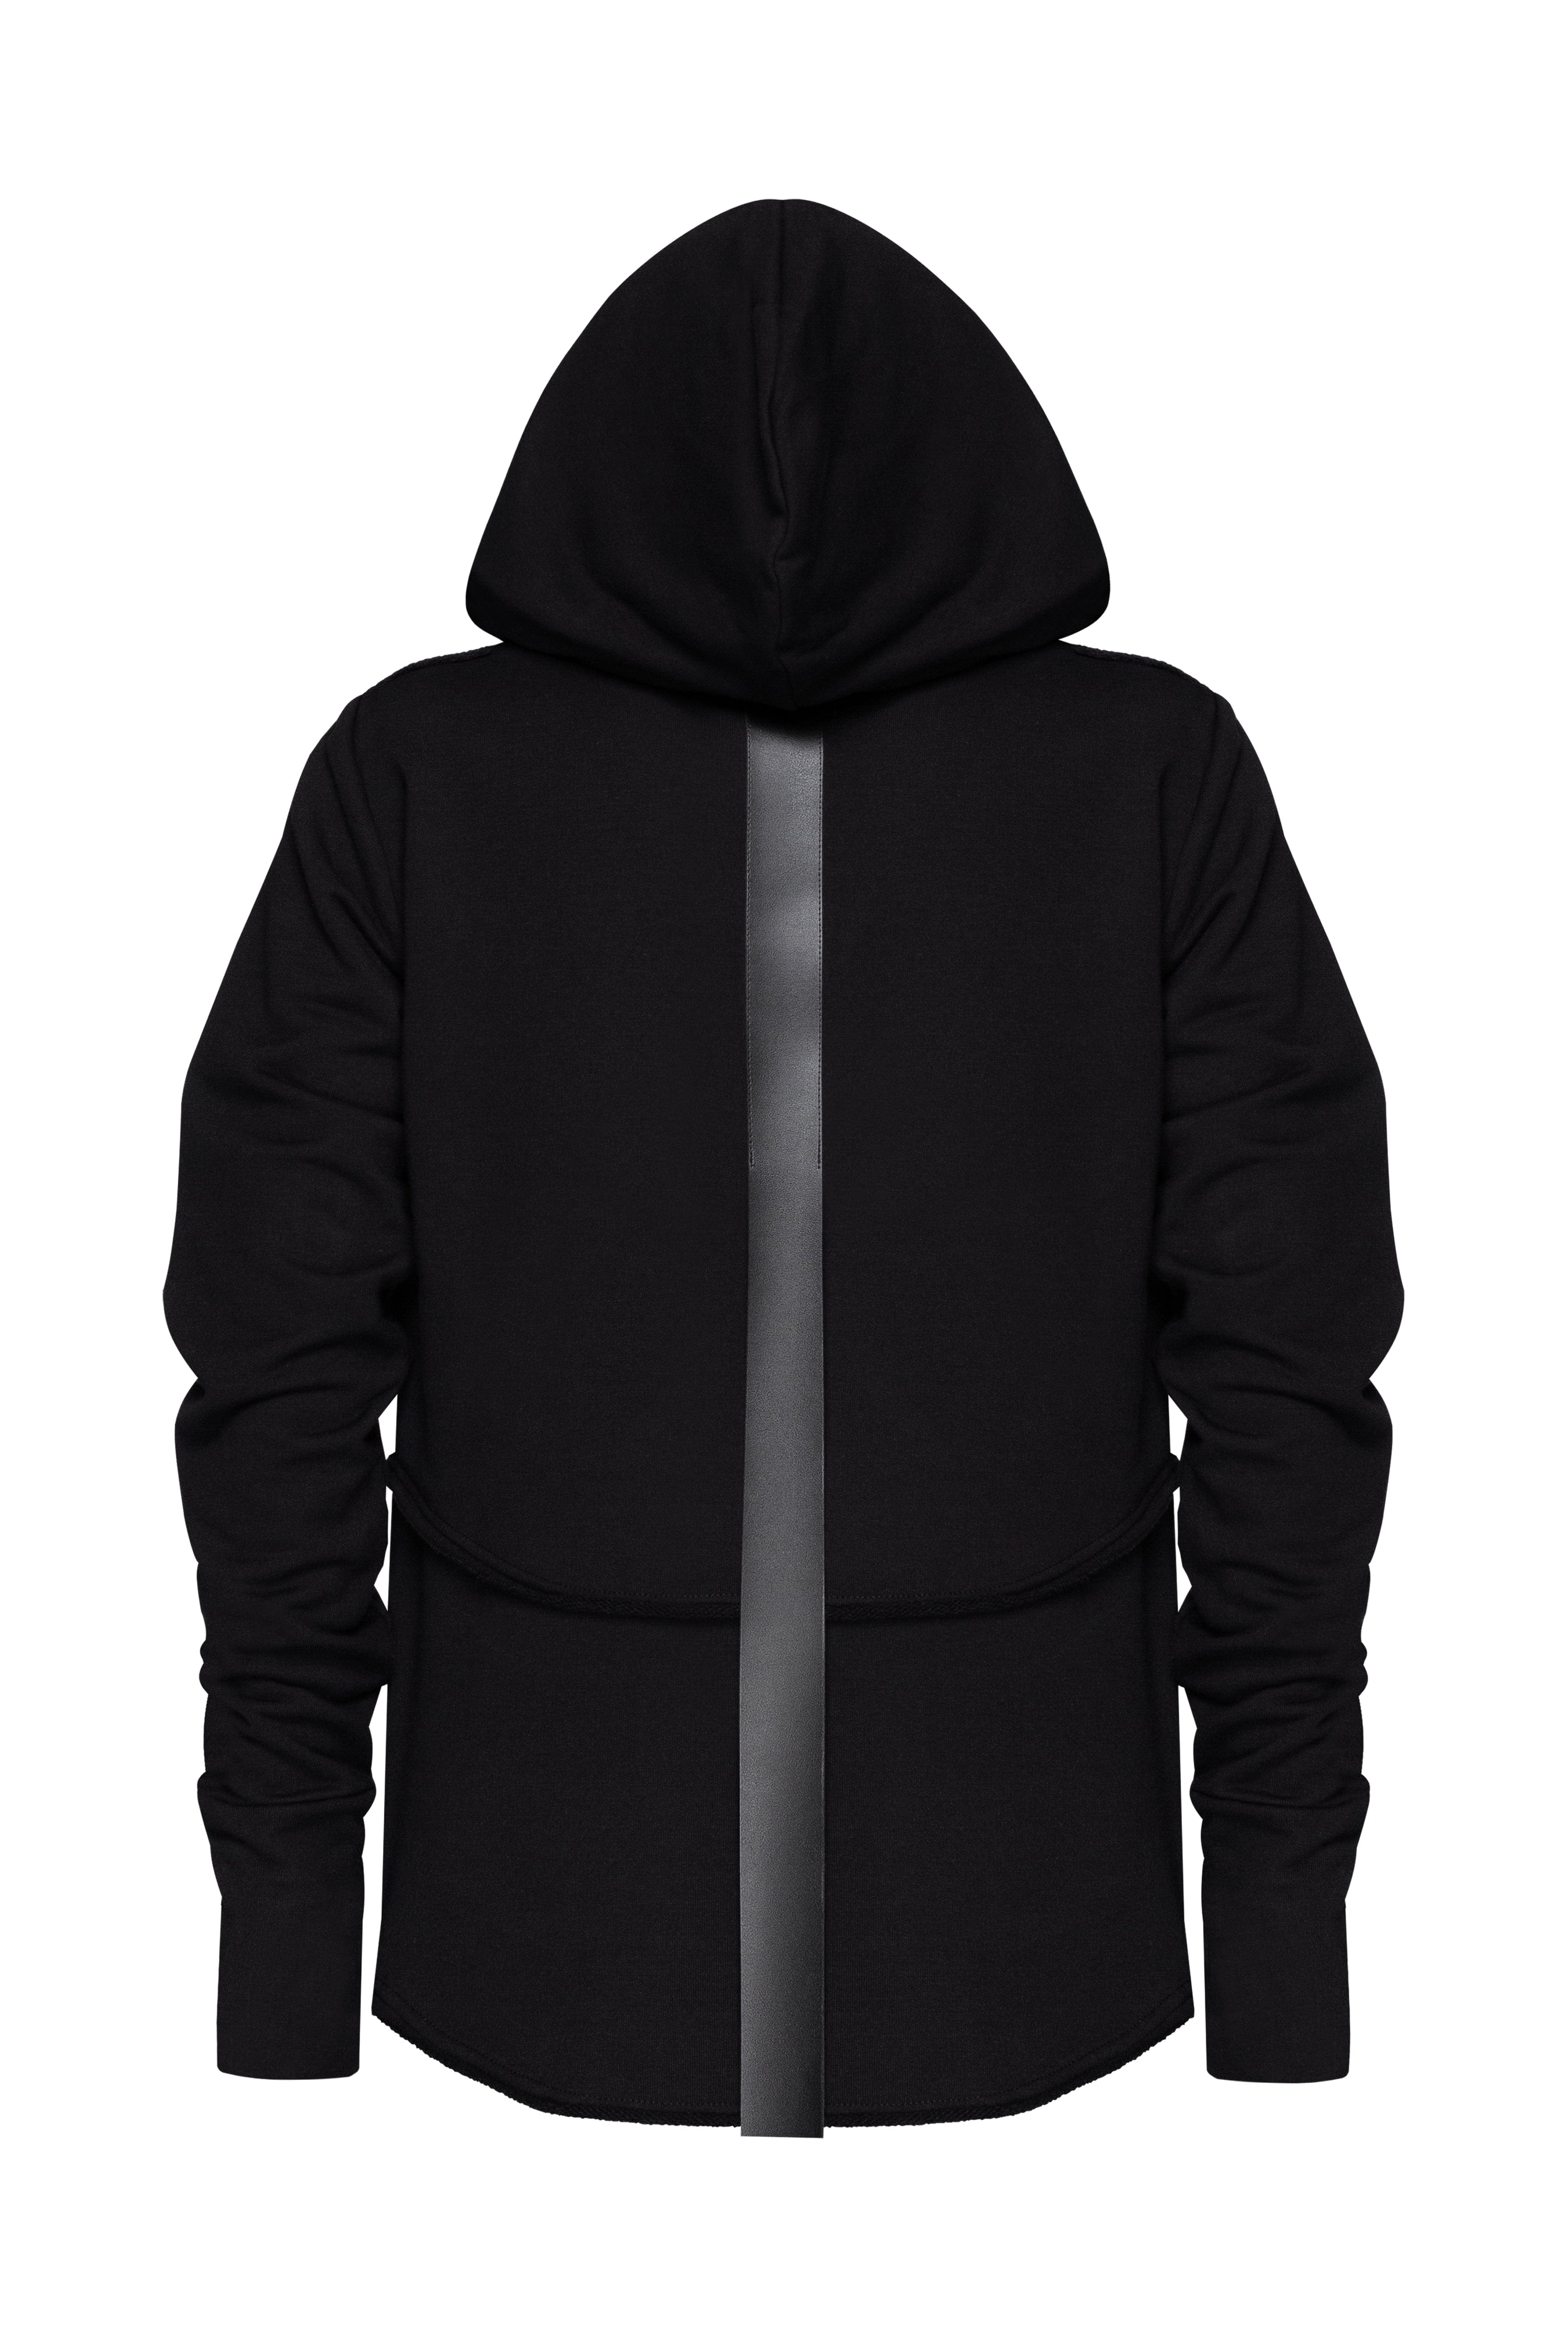 MDNT45 Tops & T-shirts Cyberpunk hooded top